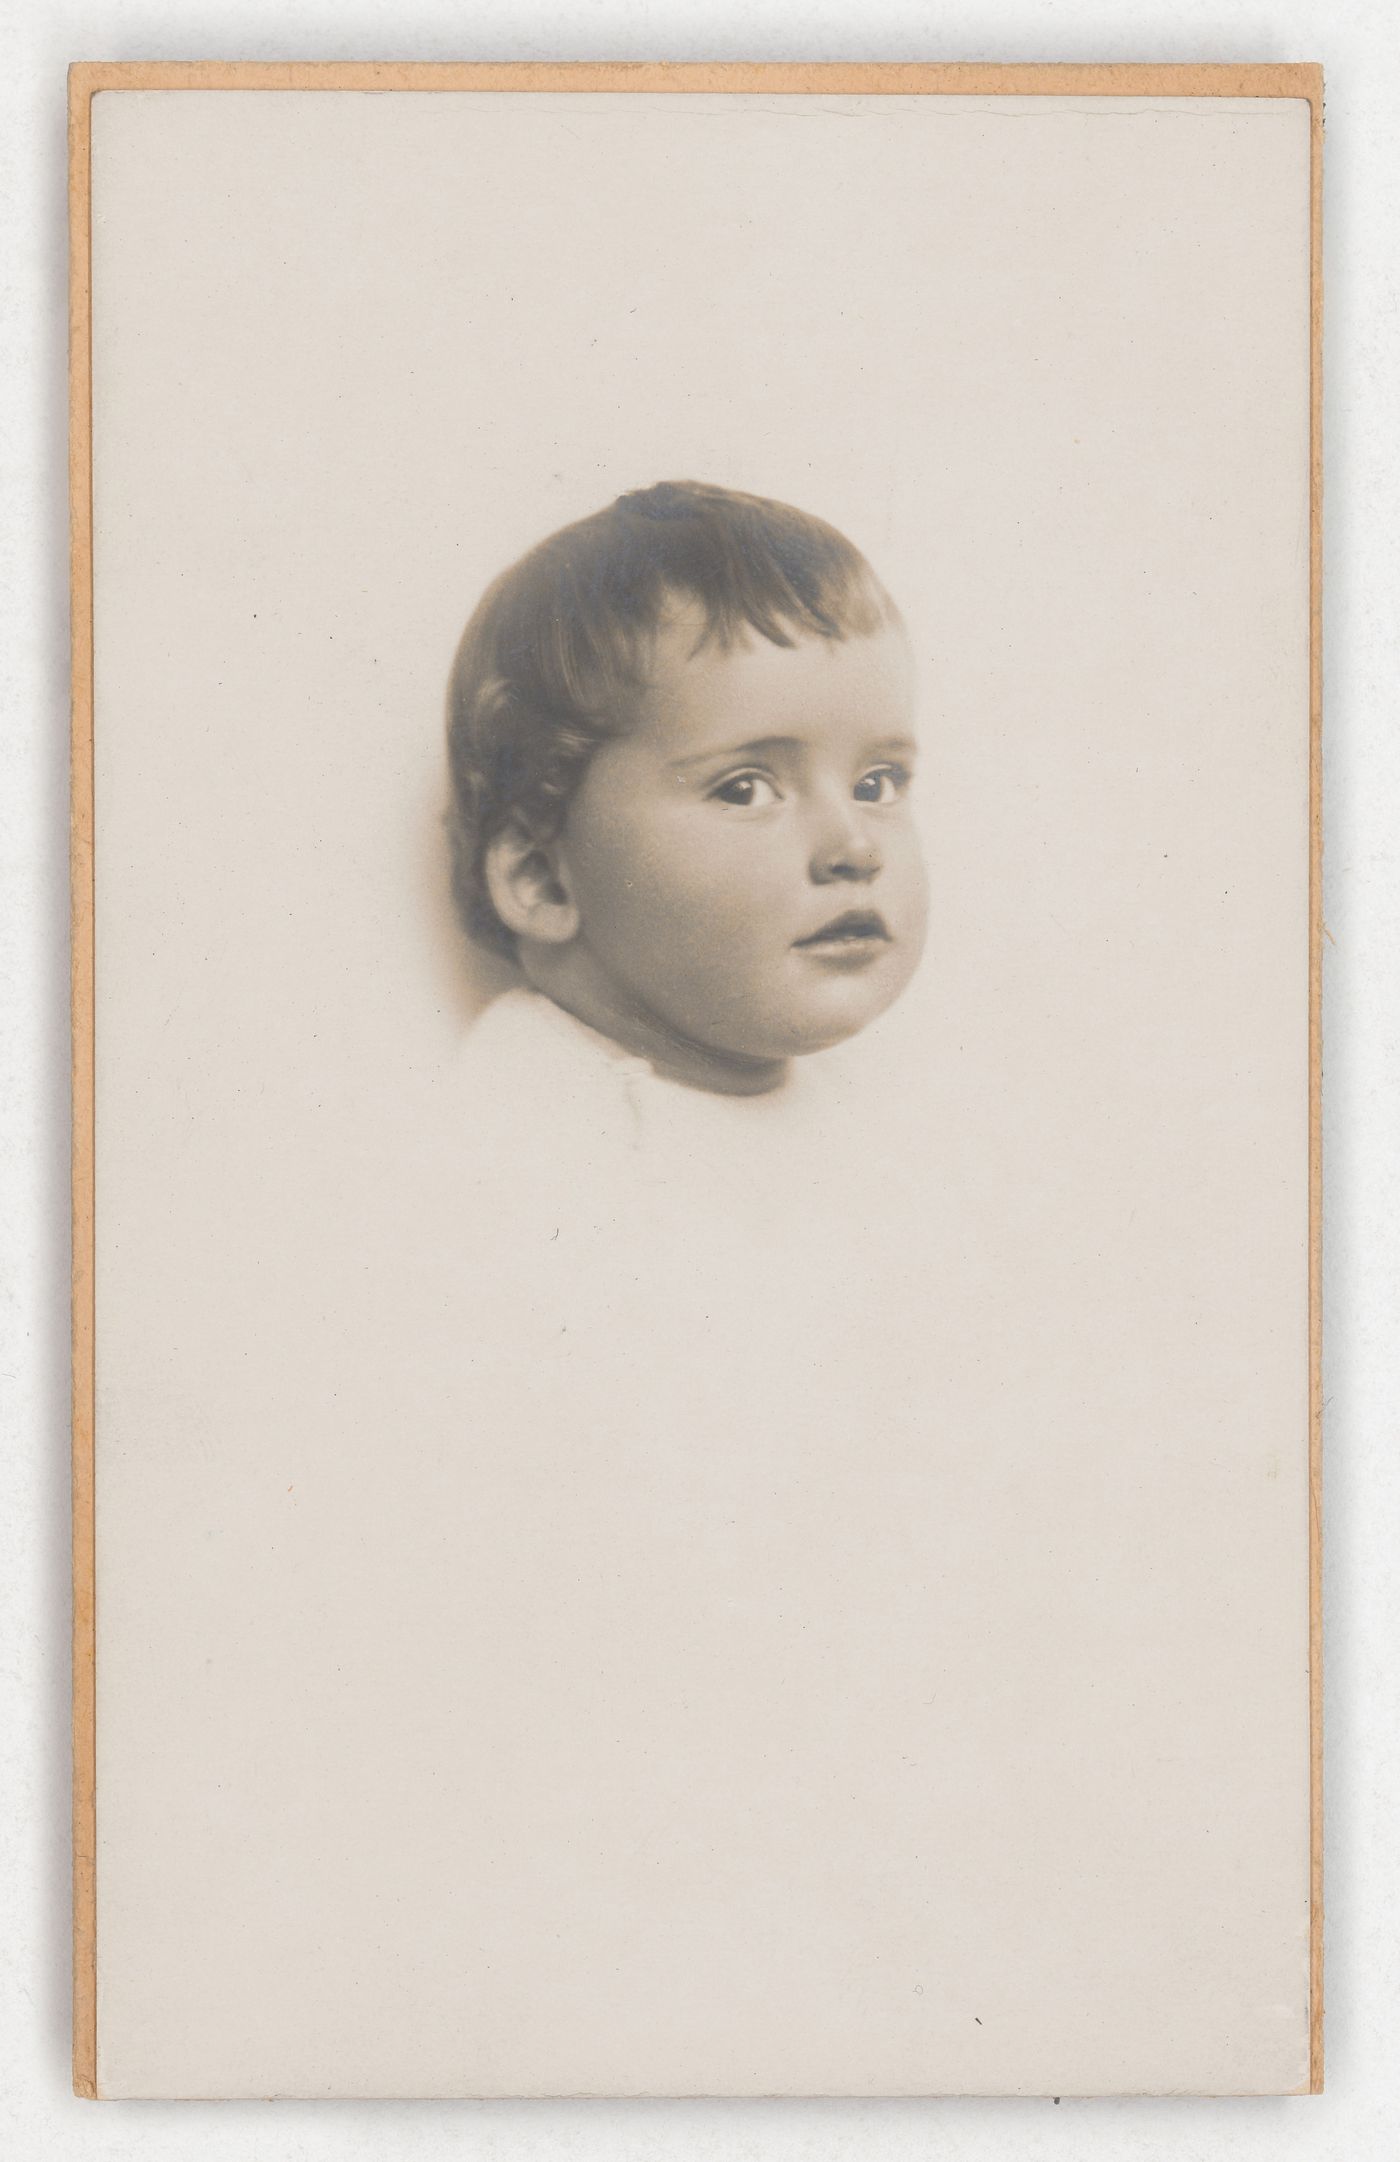 Portrait of baby, probably John C. Parkin